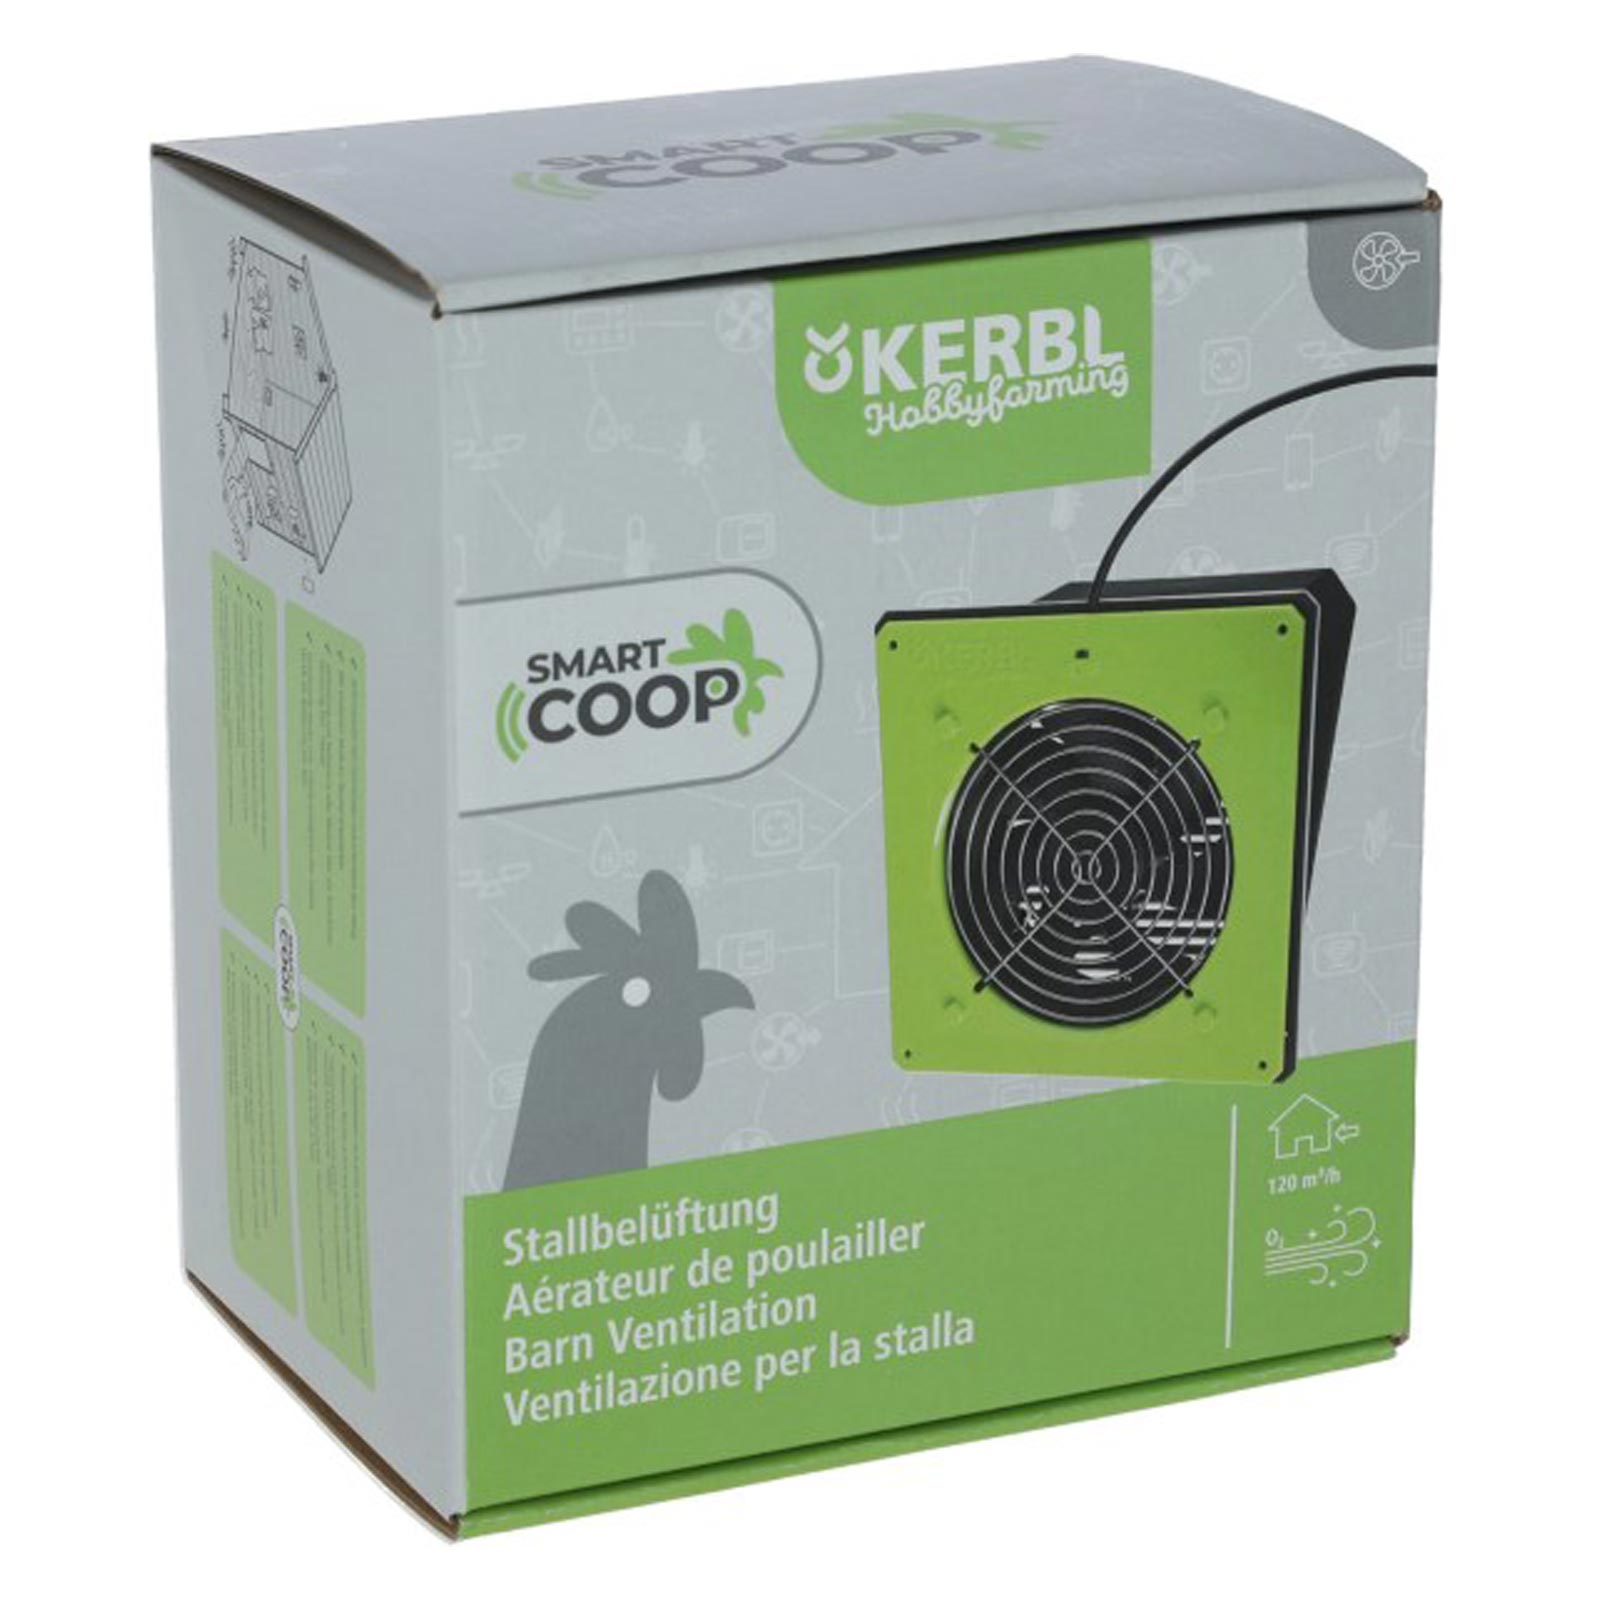 SmartCoop ventilatore per pollaio